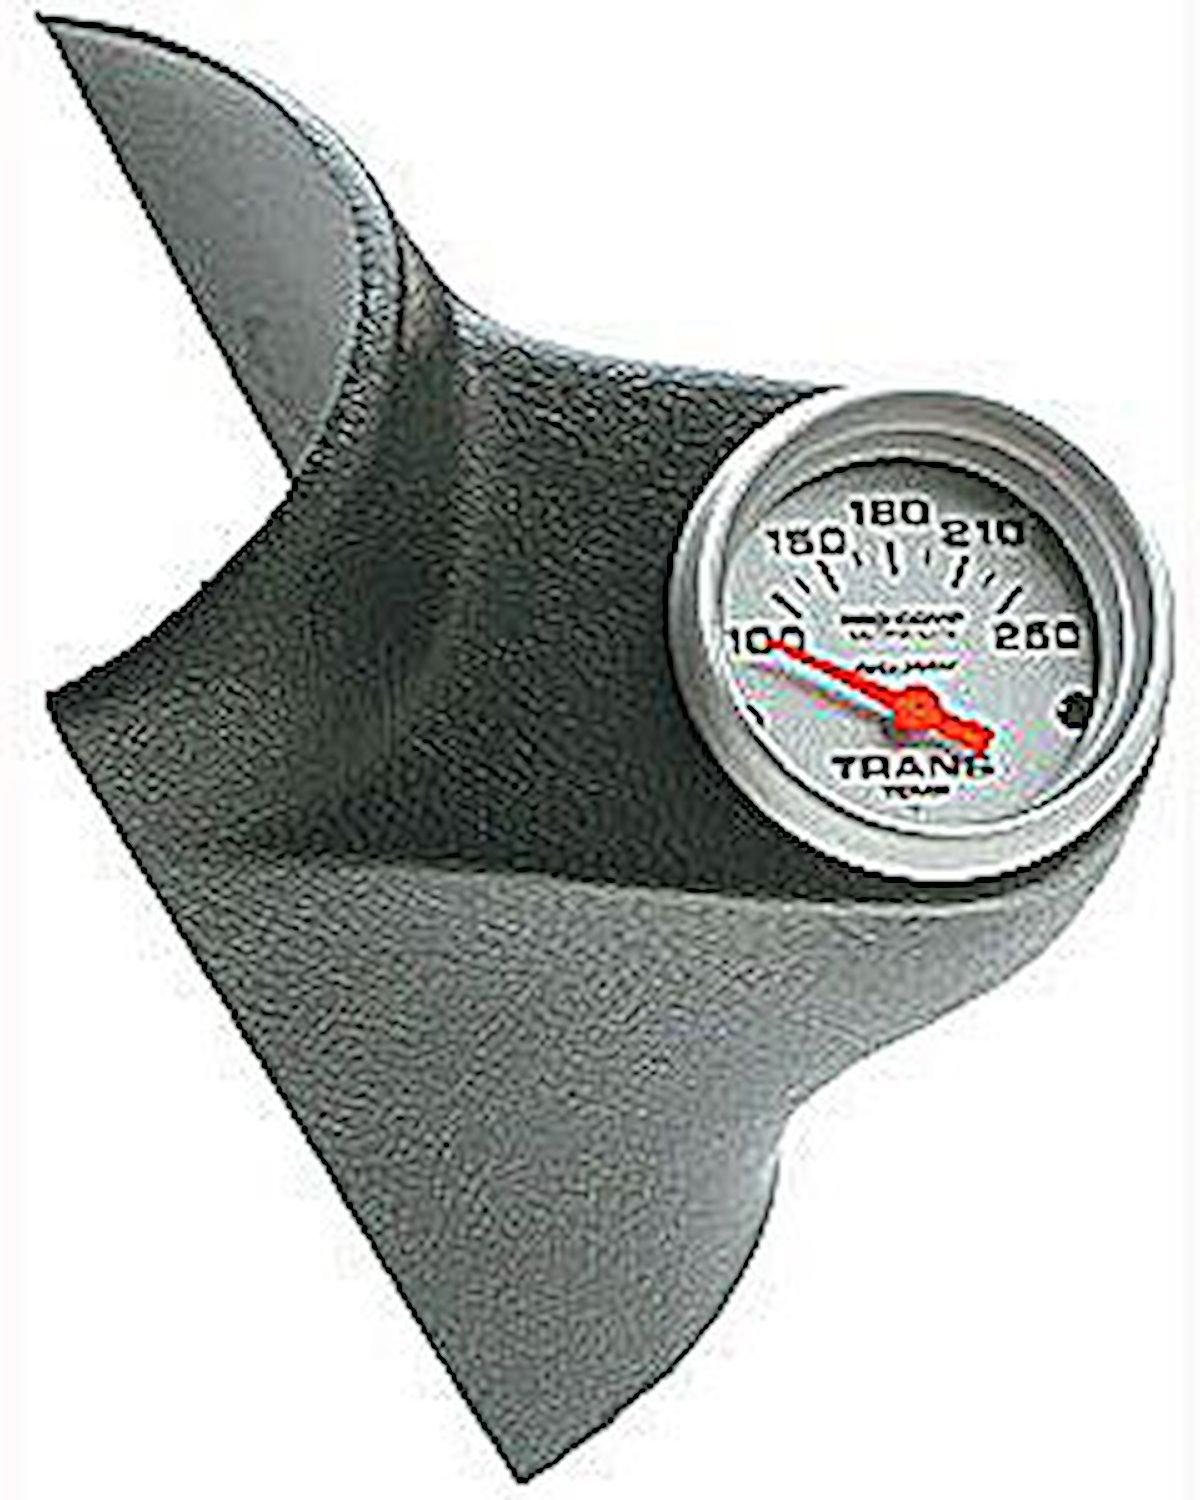 A-Pillar Single Gauge Kit 1998-02 Ram 2500/3500 Pickup Includes: